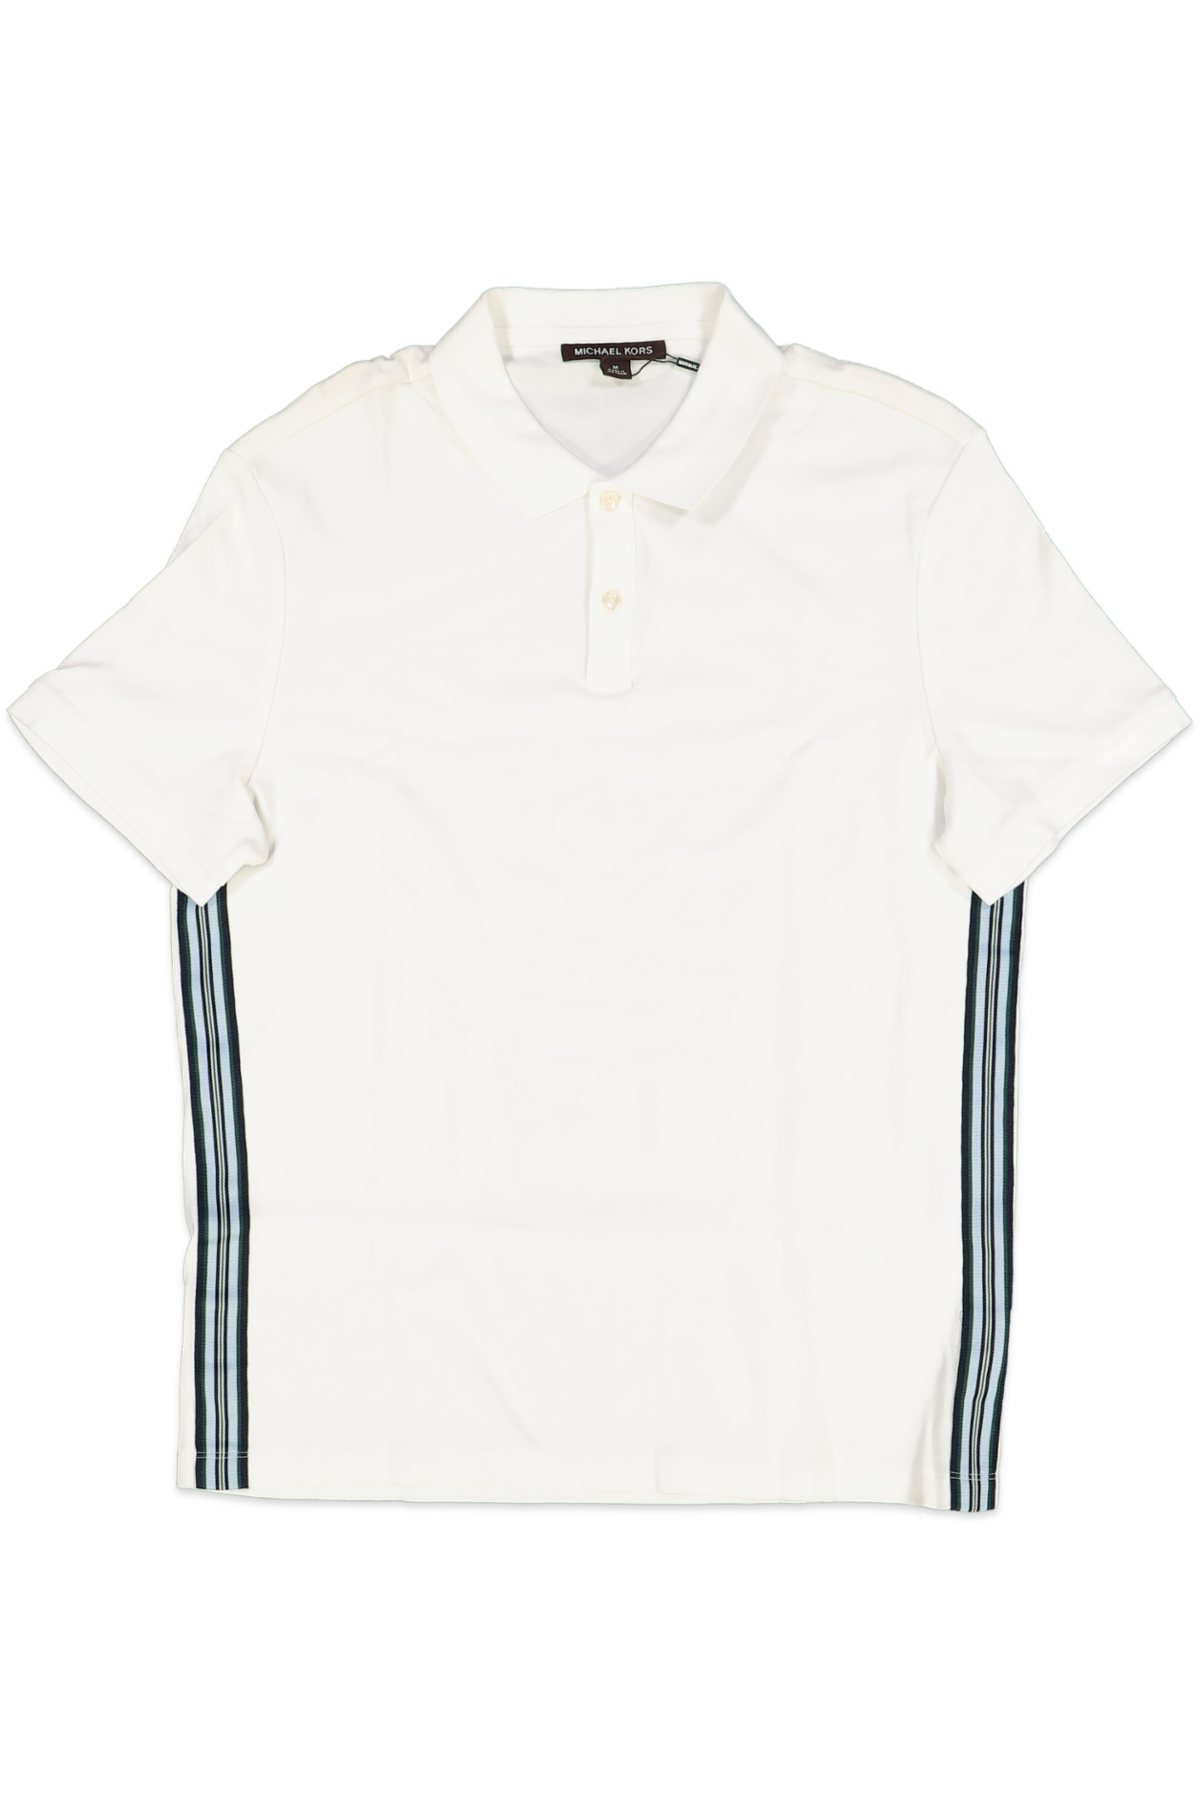 Michael Kors WHITE Side Tape Stripe Soft Polo Shirt